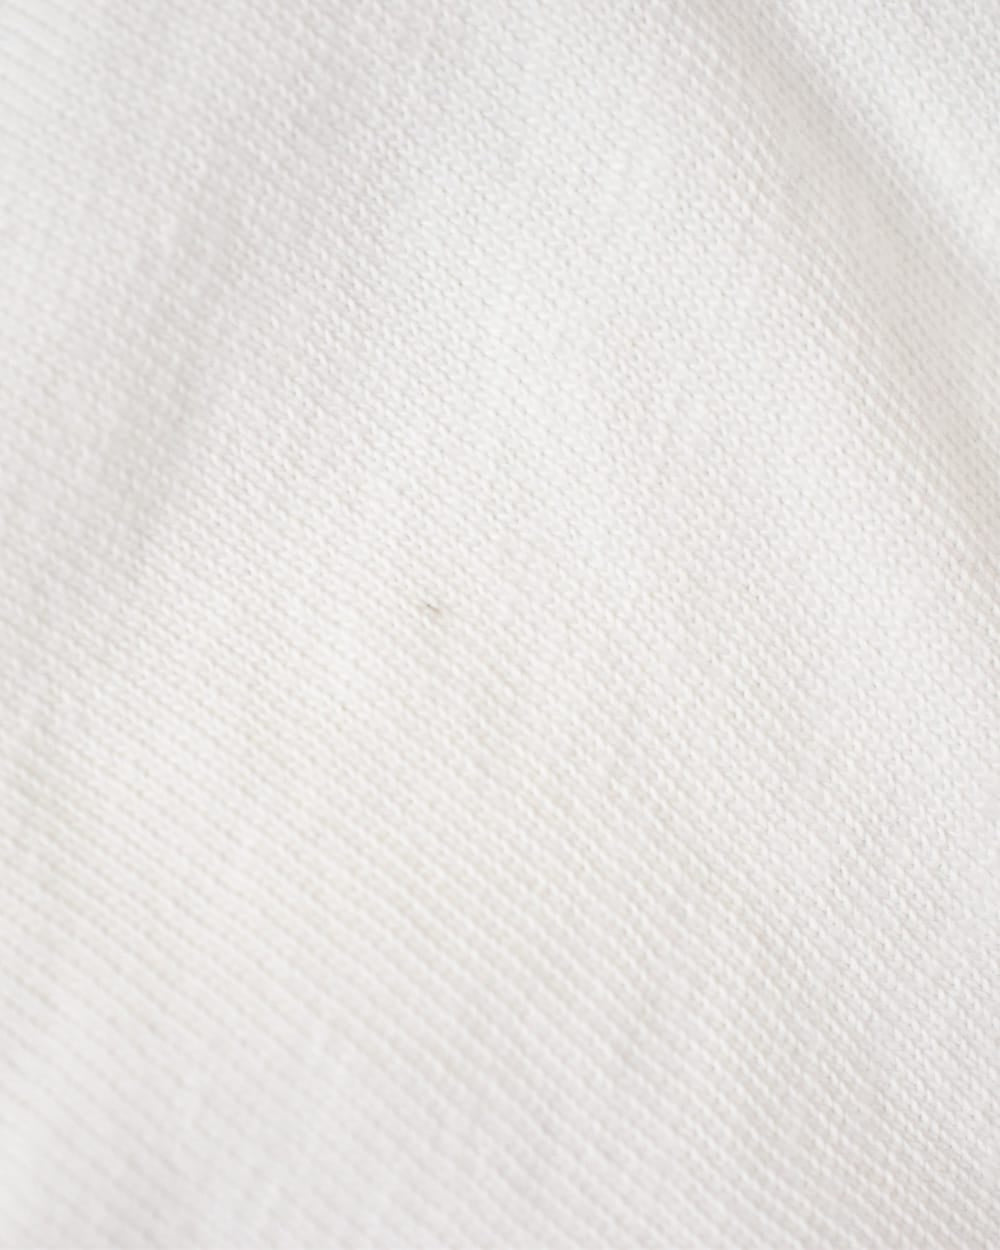 White Polo Ralph Lauren Rugby Shirt - Medium